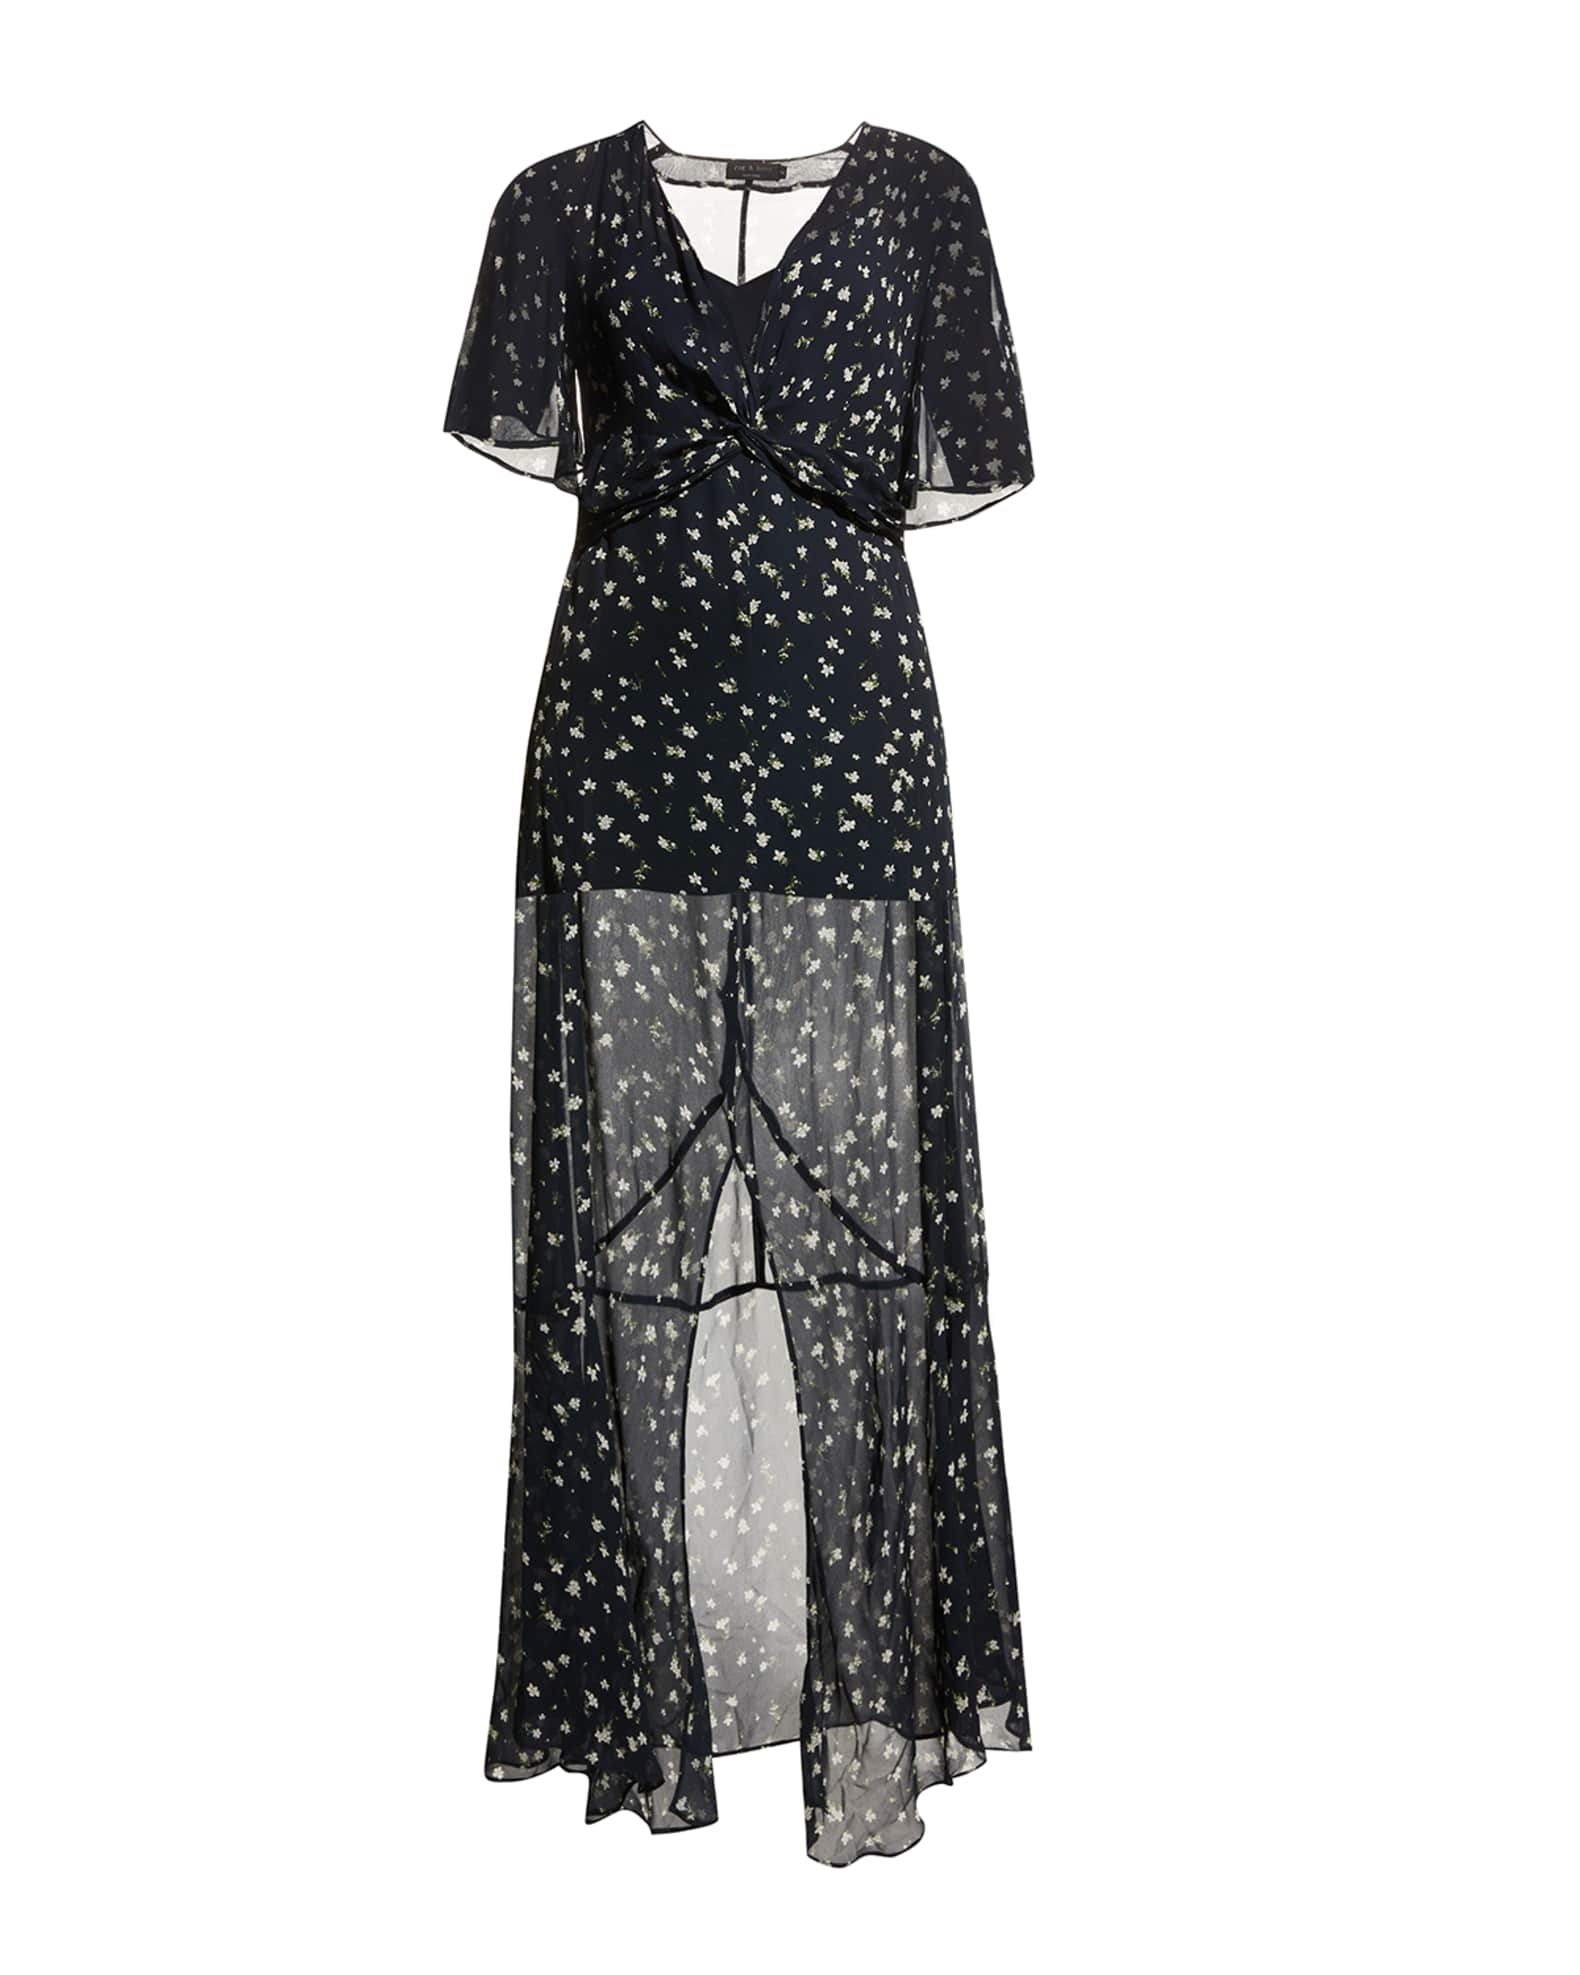 Rag & Bone Tamar Floral Dress | Neiman Marcus